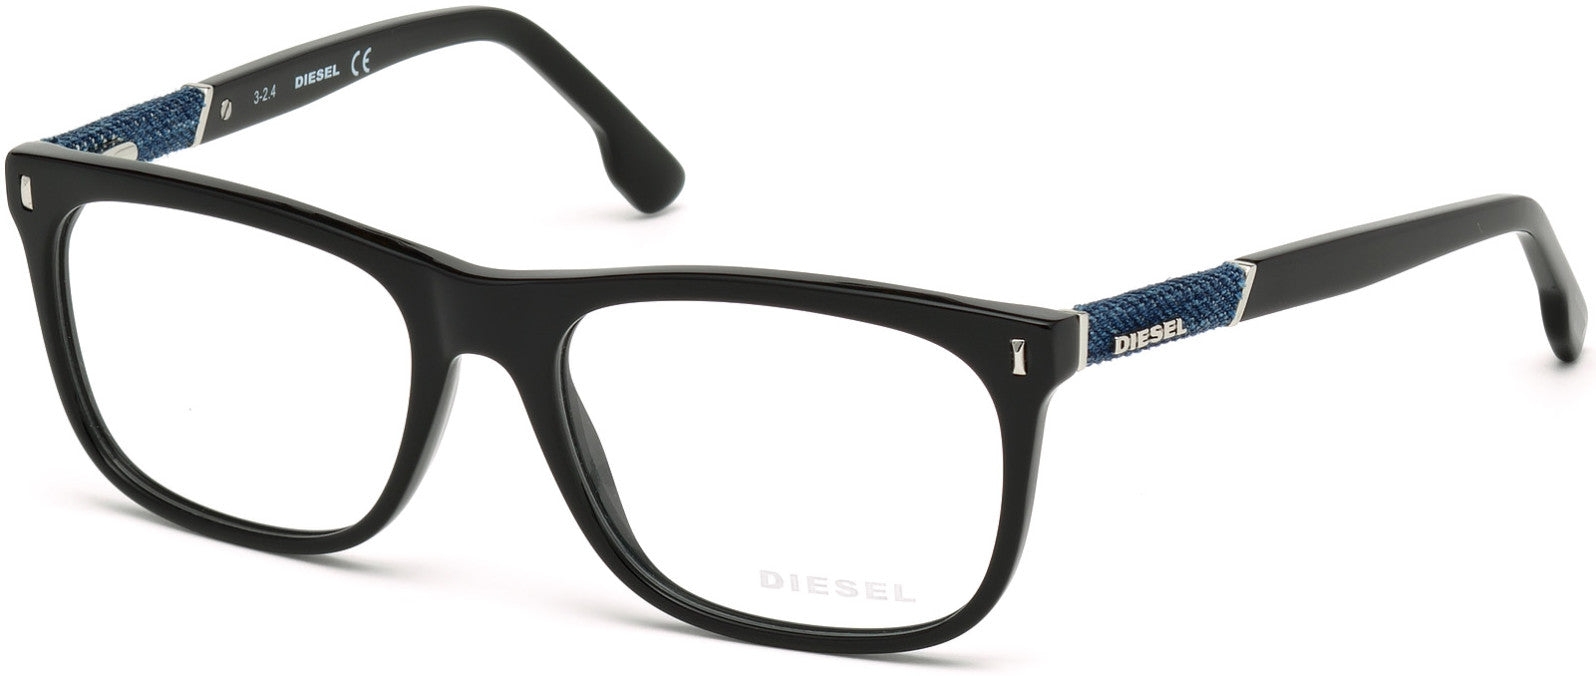 Diesel DL5157 Geometric Eyeglasses 001-001 - Shiny Black